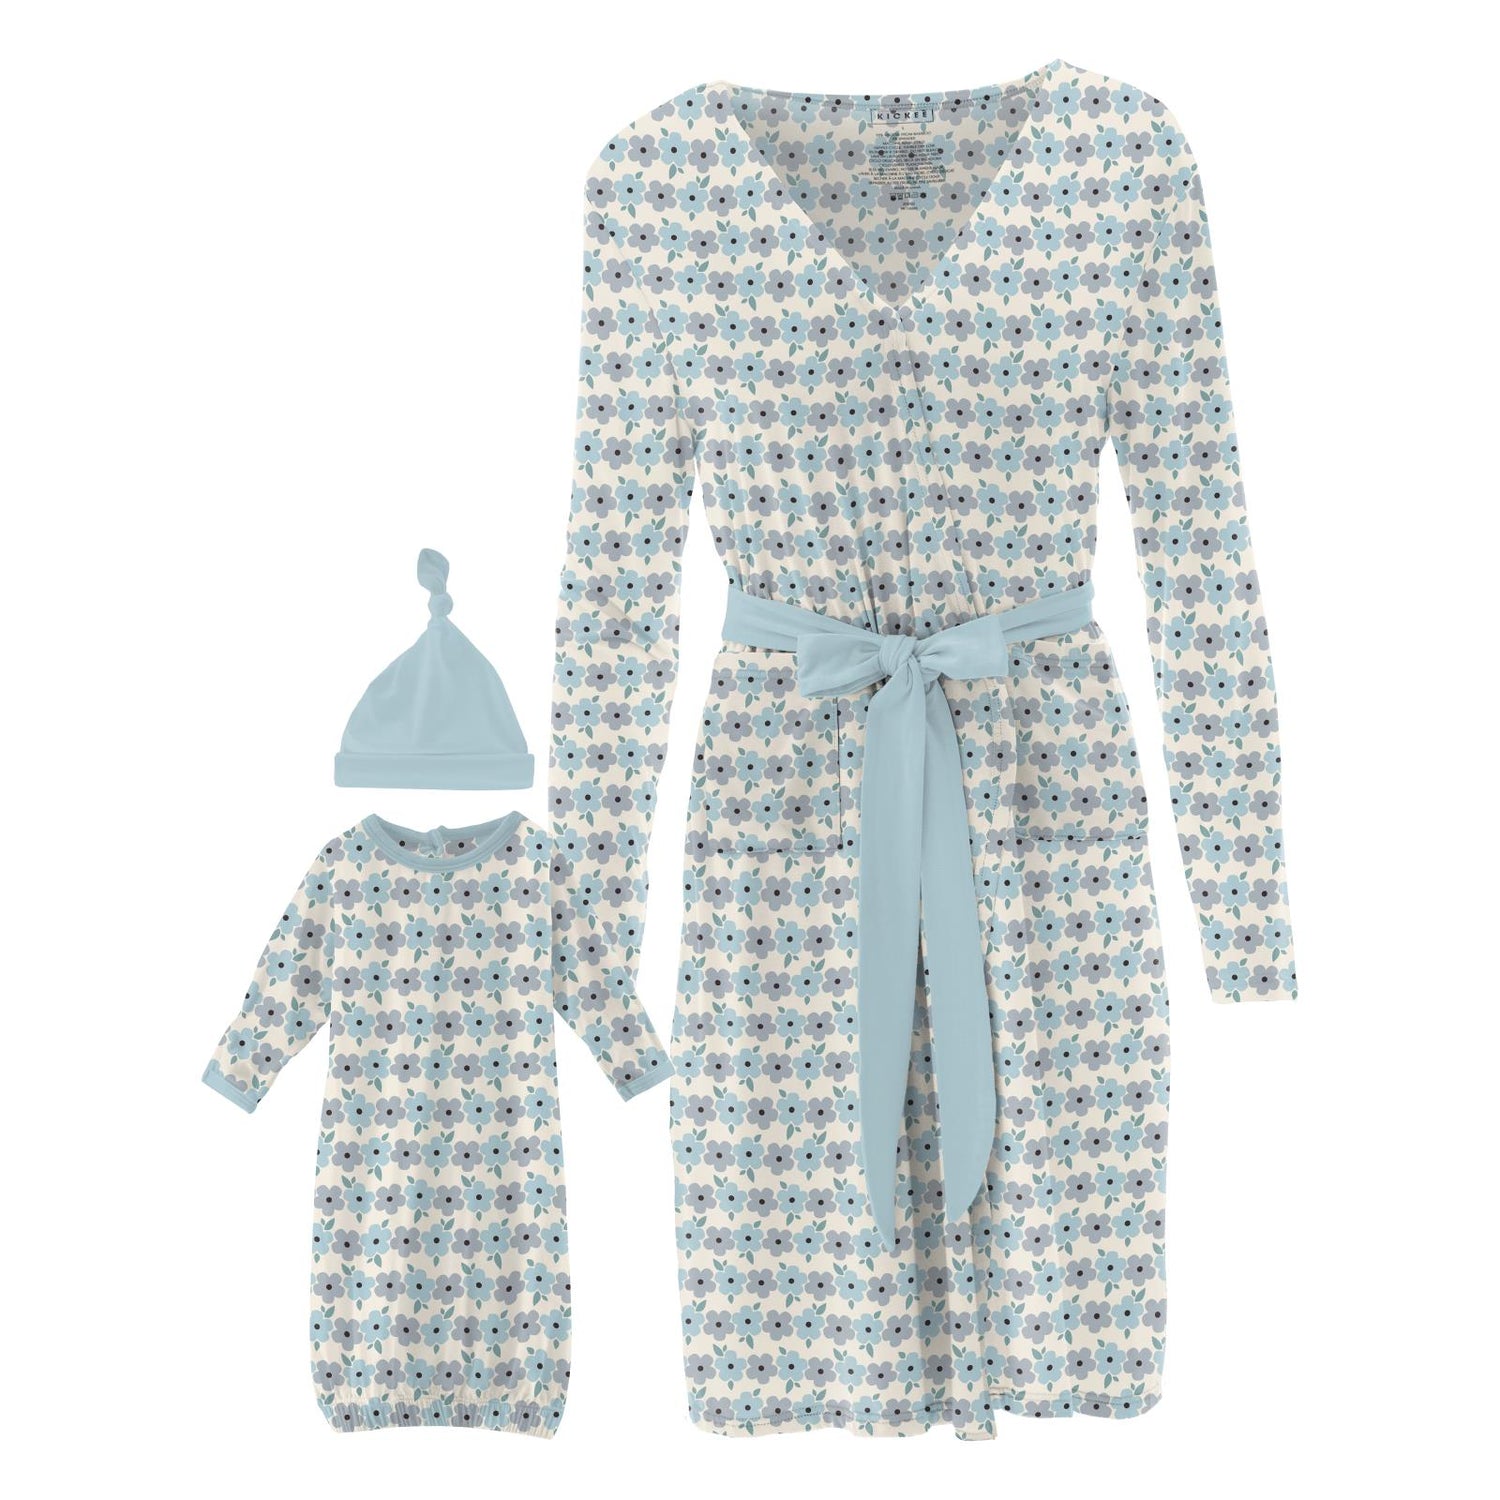 Women's Maternity/Nursing Robe & Layette Gown Set in Natural Hydrangea